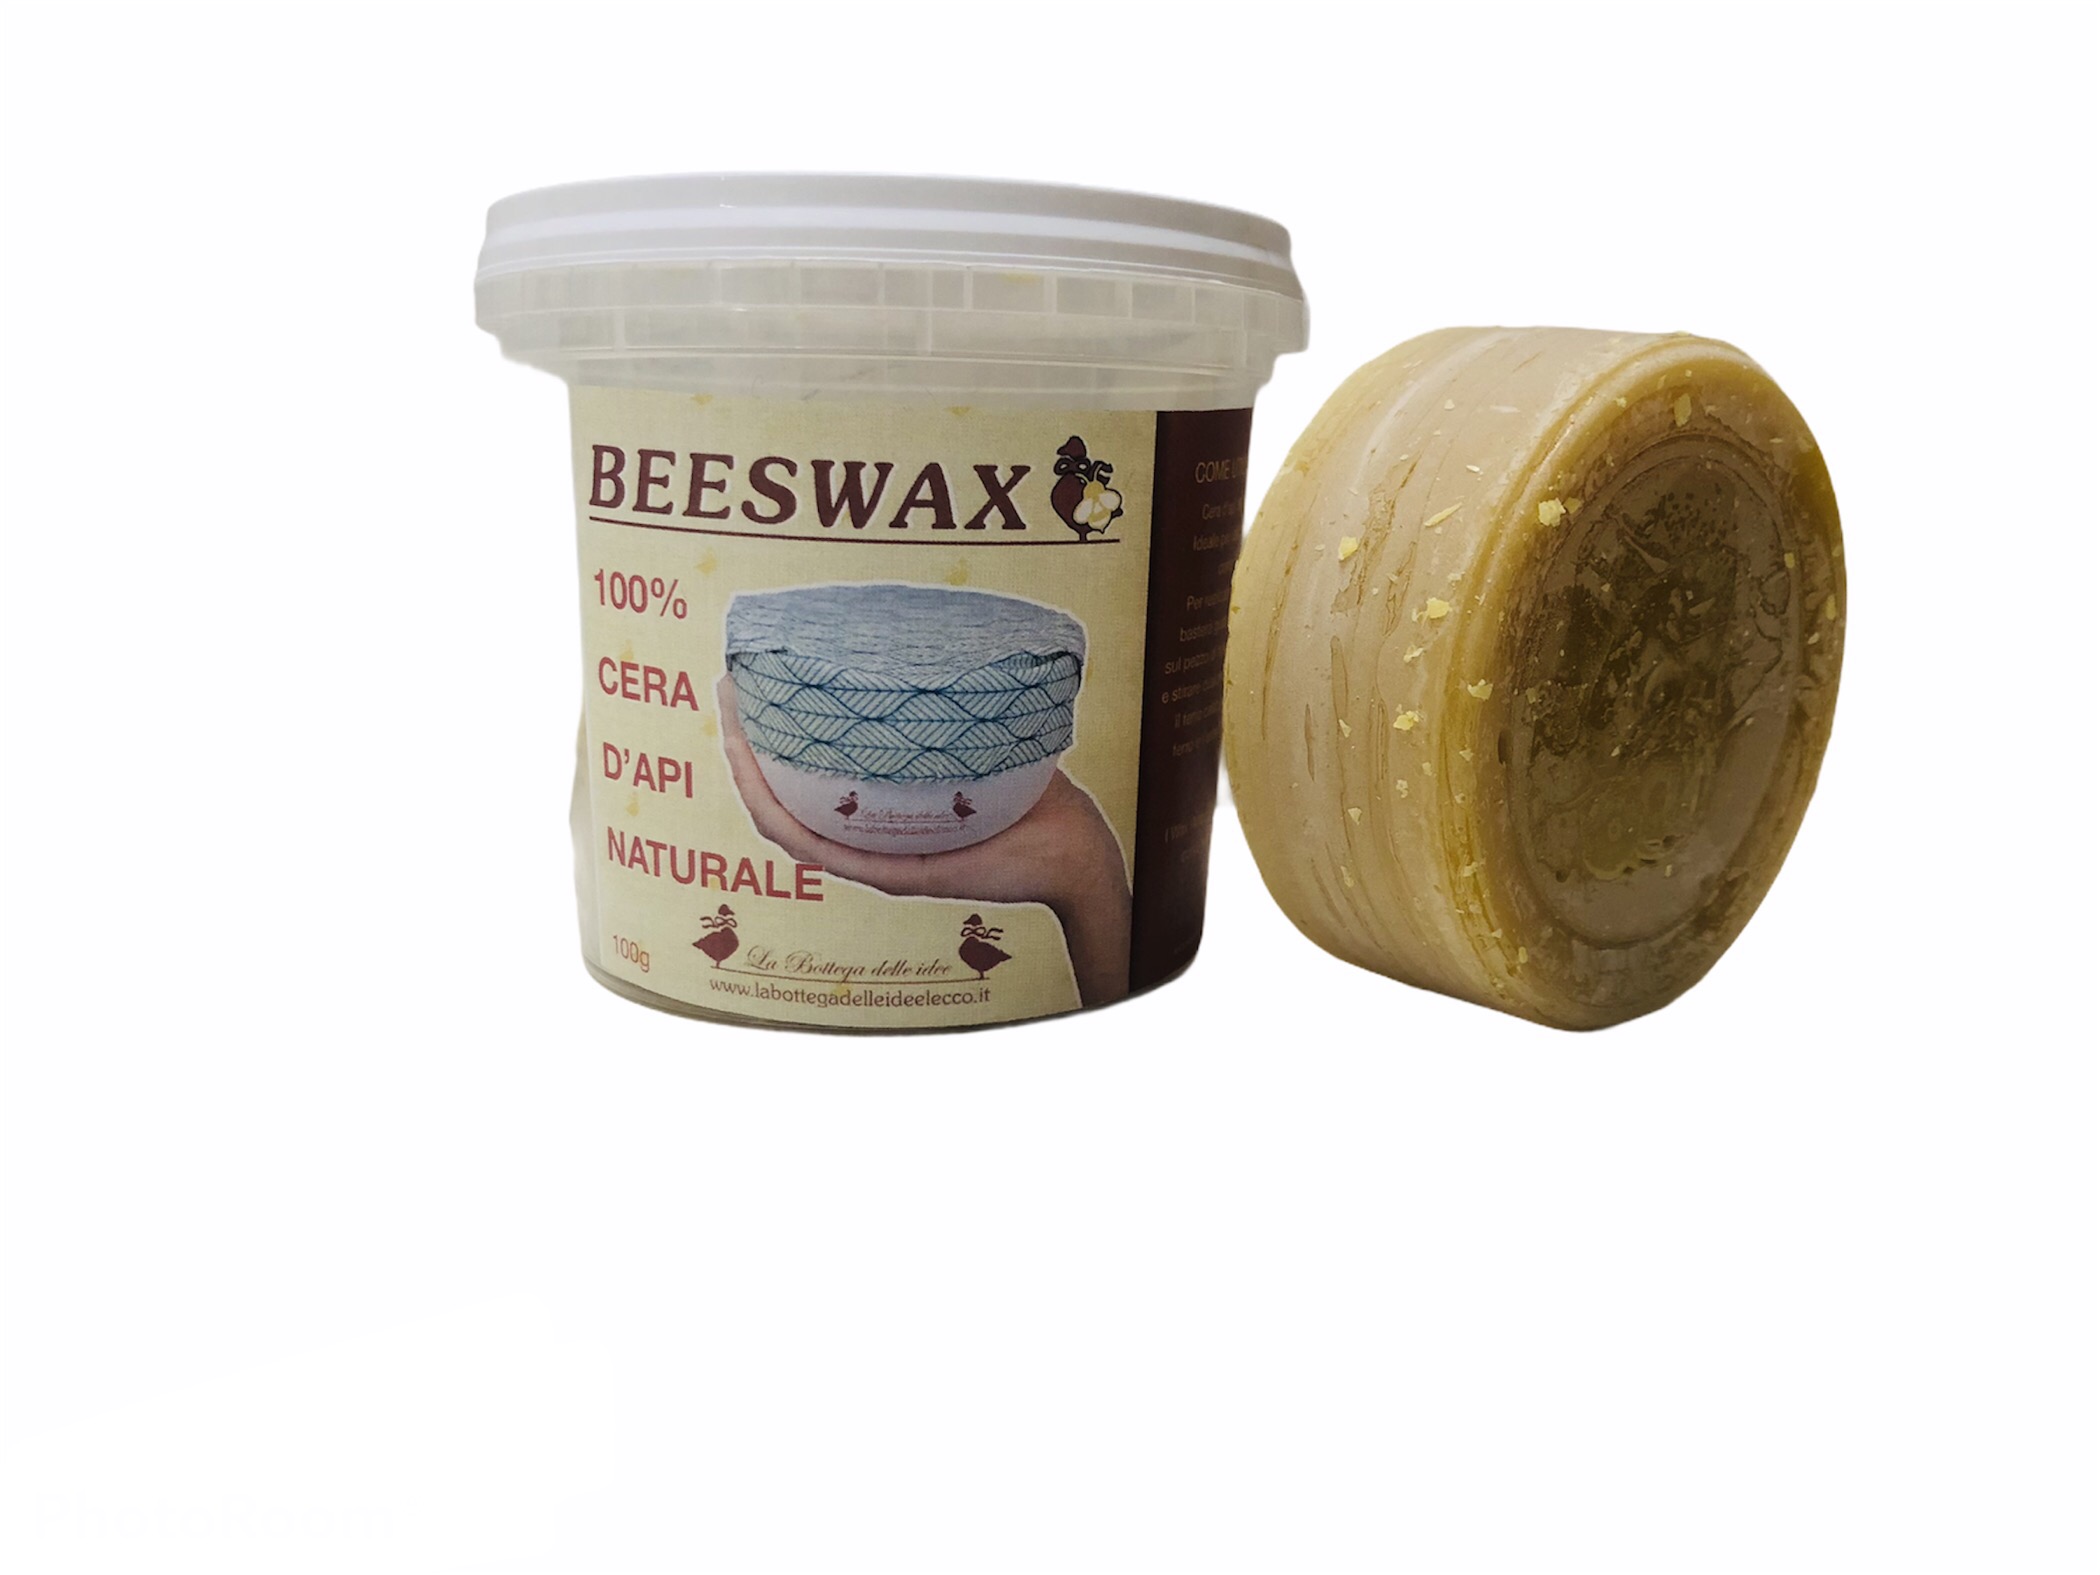 Honeycomb 3x Medium 3er Set Bee S Wrap cera d api Panni ? Die alternativa ecologica zu plastica schermo 